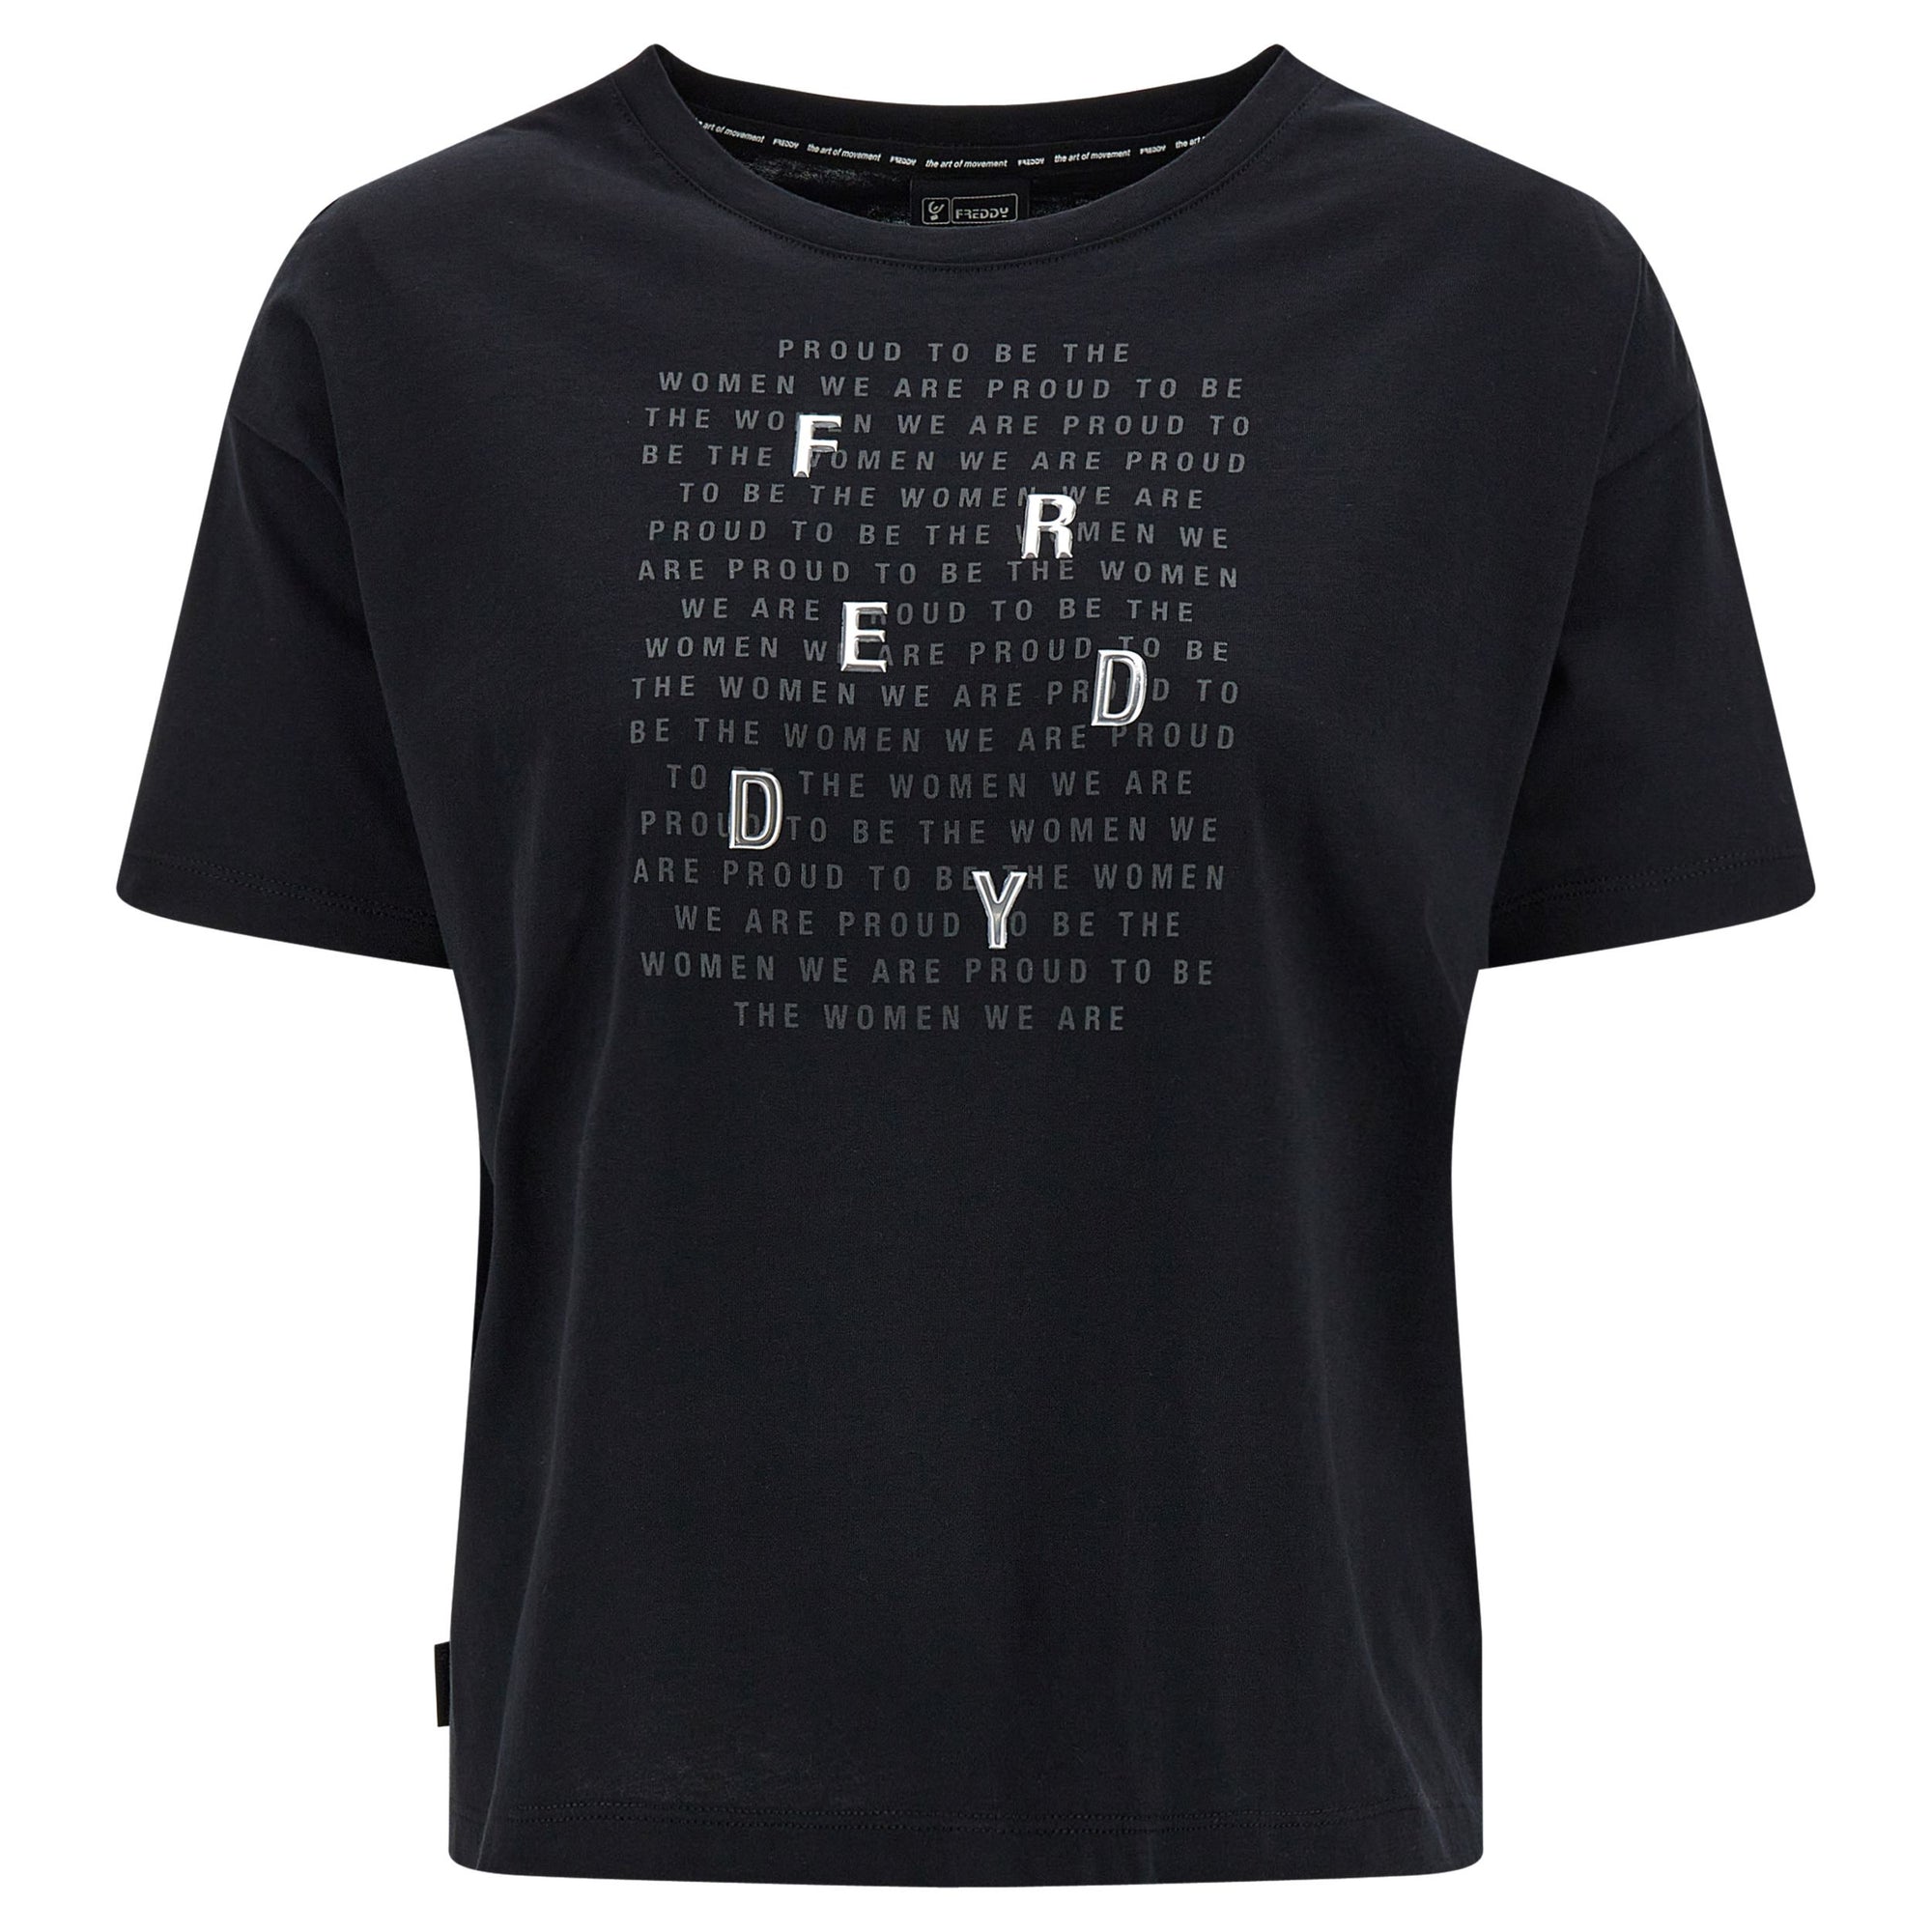 Freddy T-shirt con stampa S2WBCCT7 N black